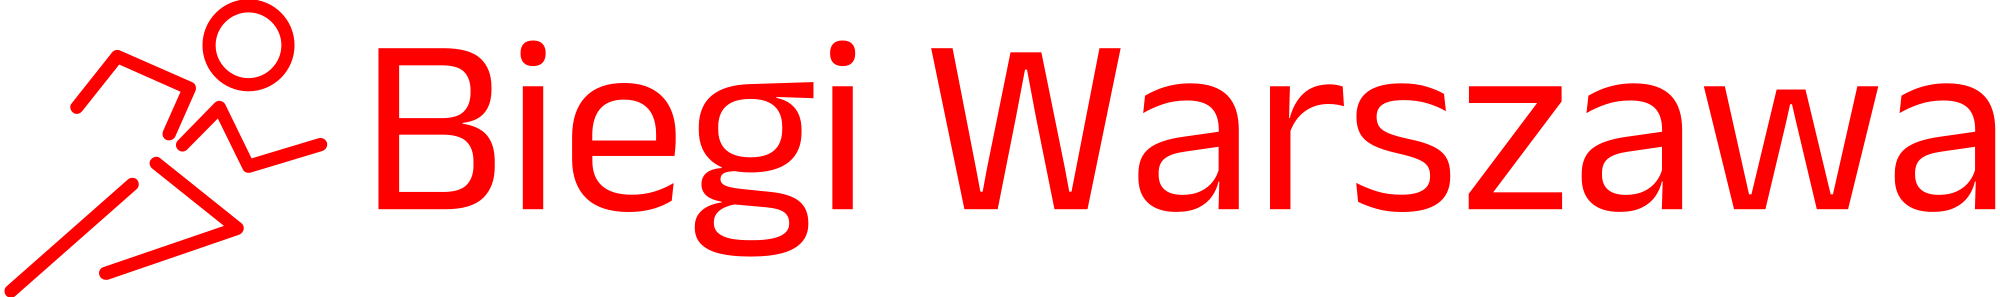 Bieganie bez tabu – Biegi Warszawa